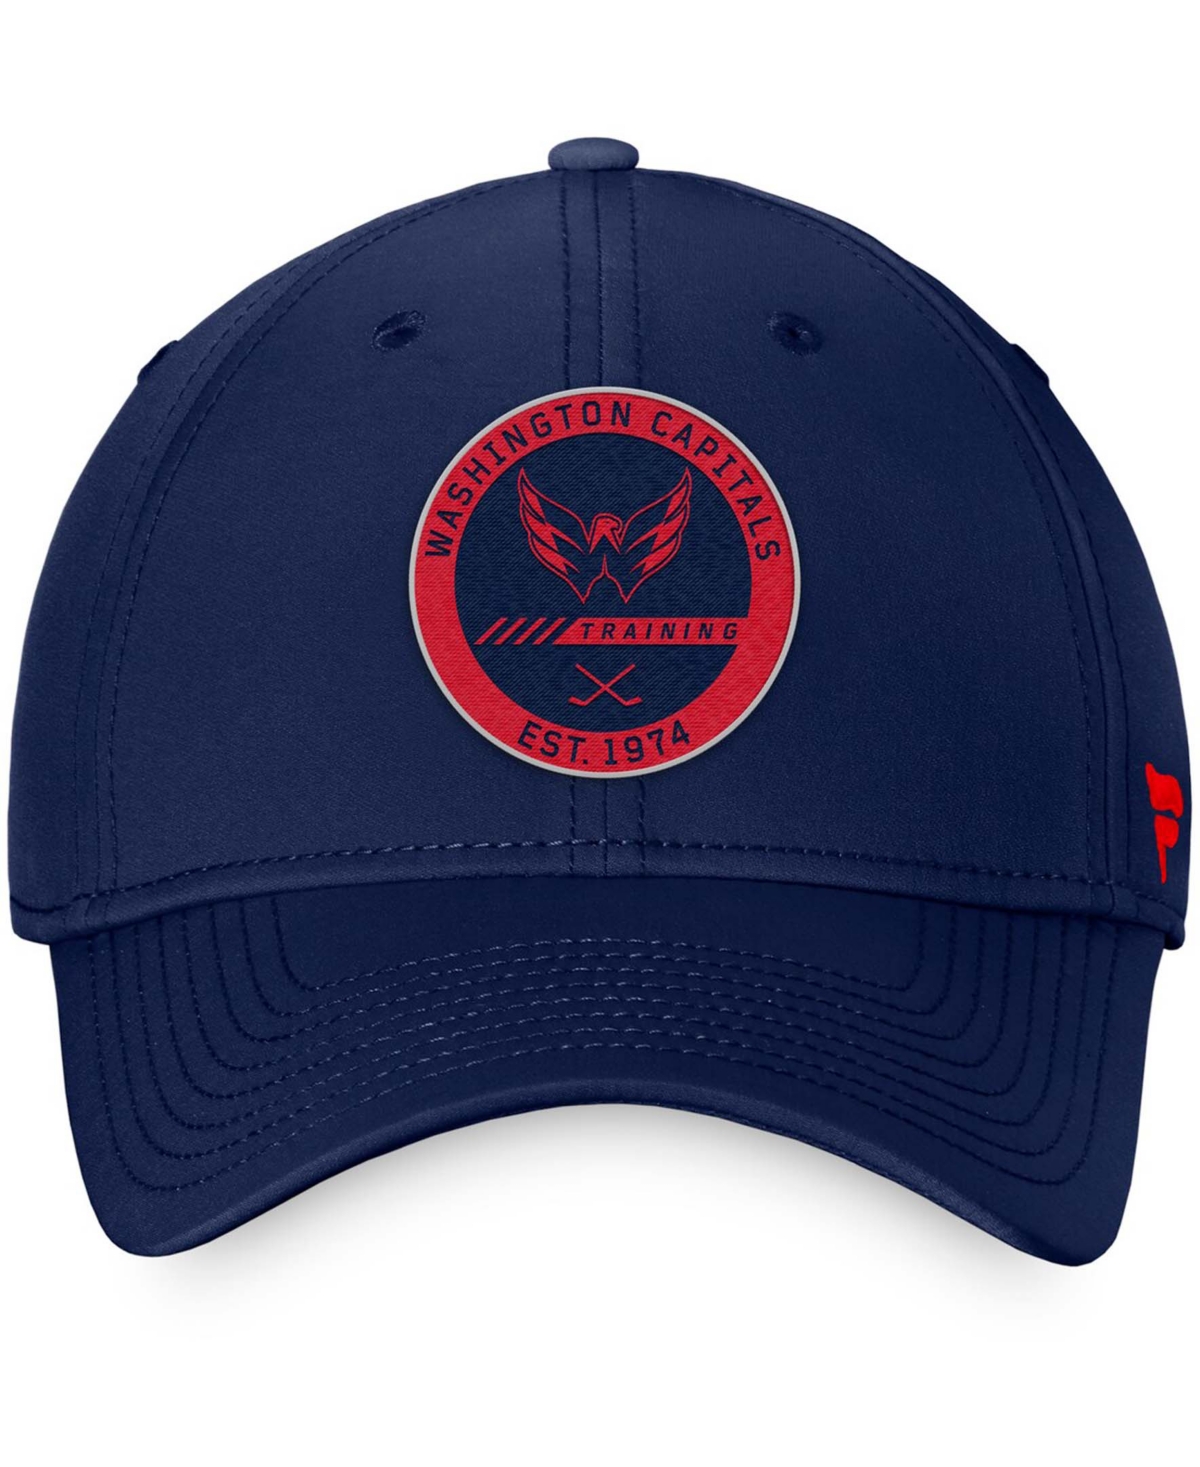 Shop Fanatics Men's Navy Washington Capitals Authentic Pro Team Training Camp Practice Flex Hat